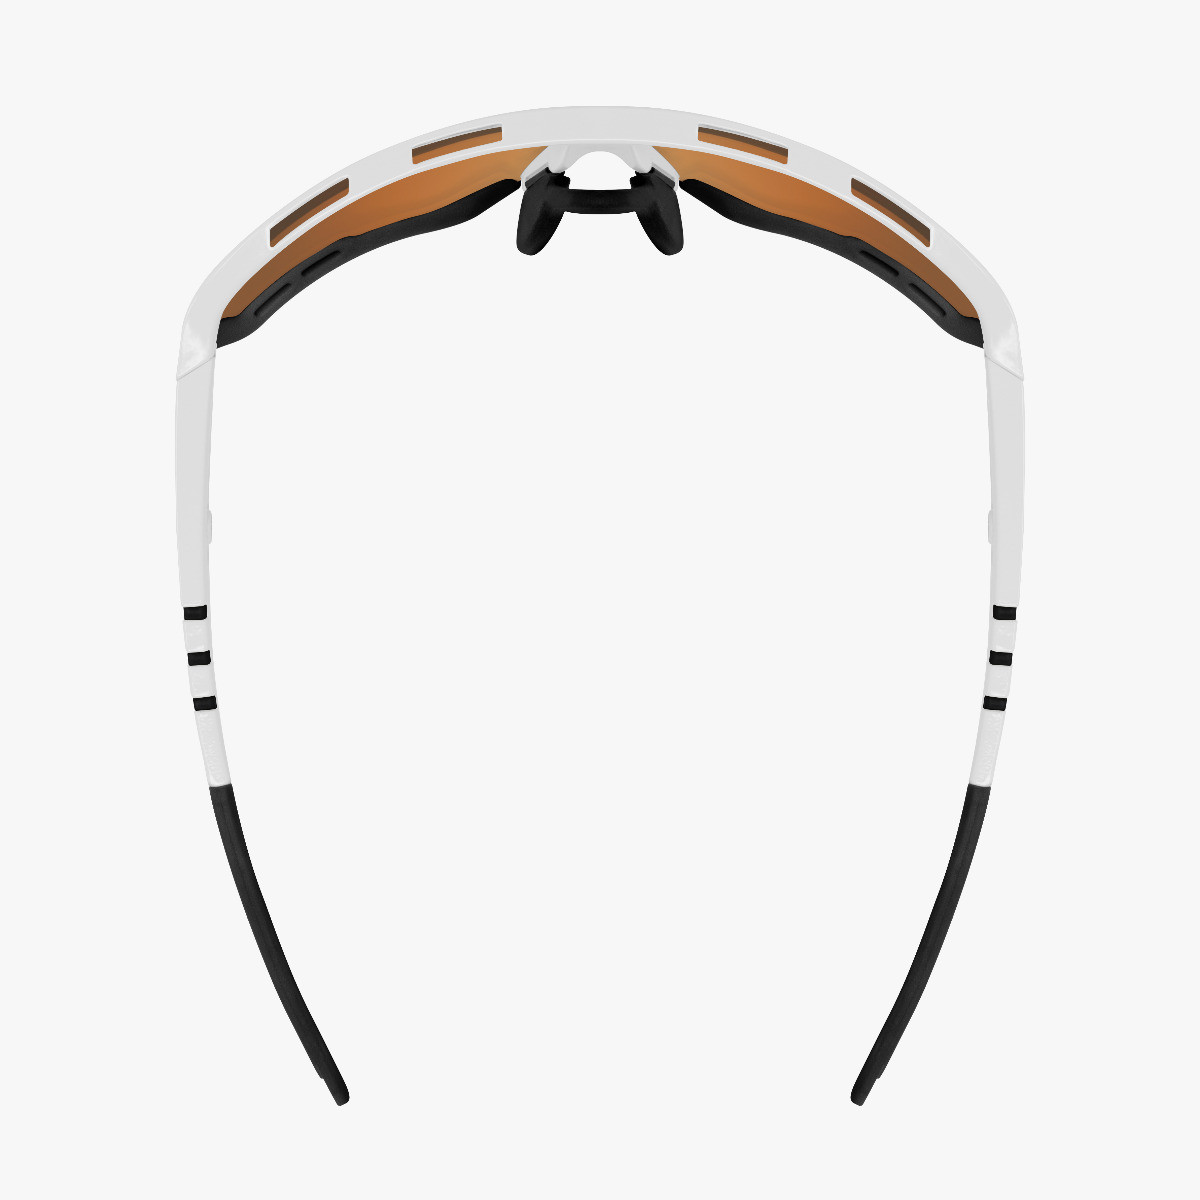 Scicon Sports | Aerotech Sport Performance Sunglasses - White / Photochromic Bronze - EY14170401